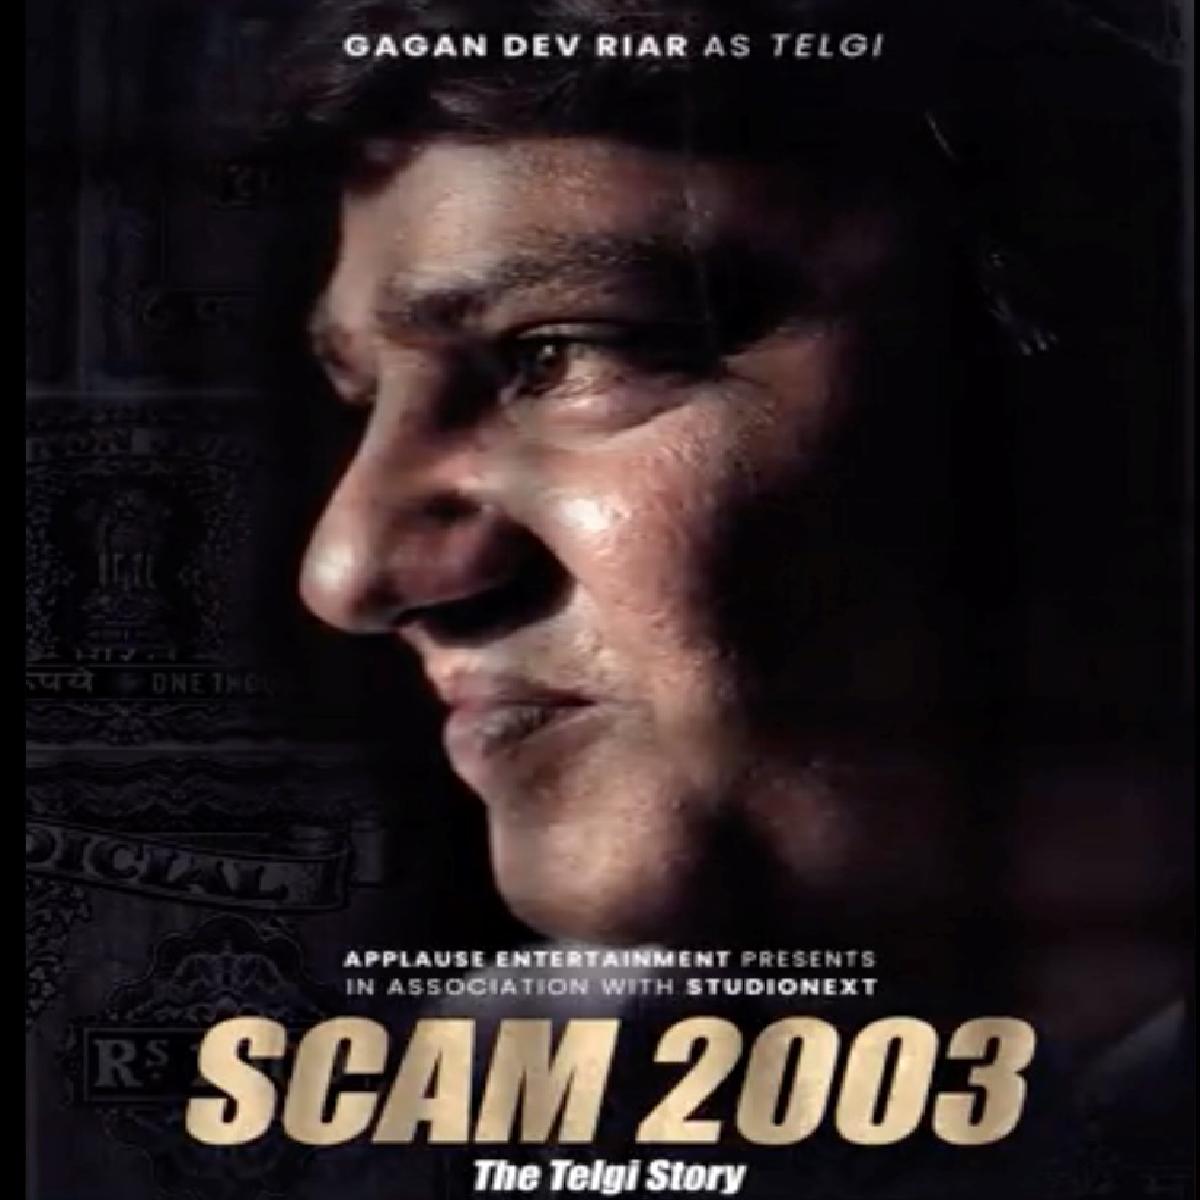 Meet Gagan Dev Riar From Scam 2003  The Telgi Story